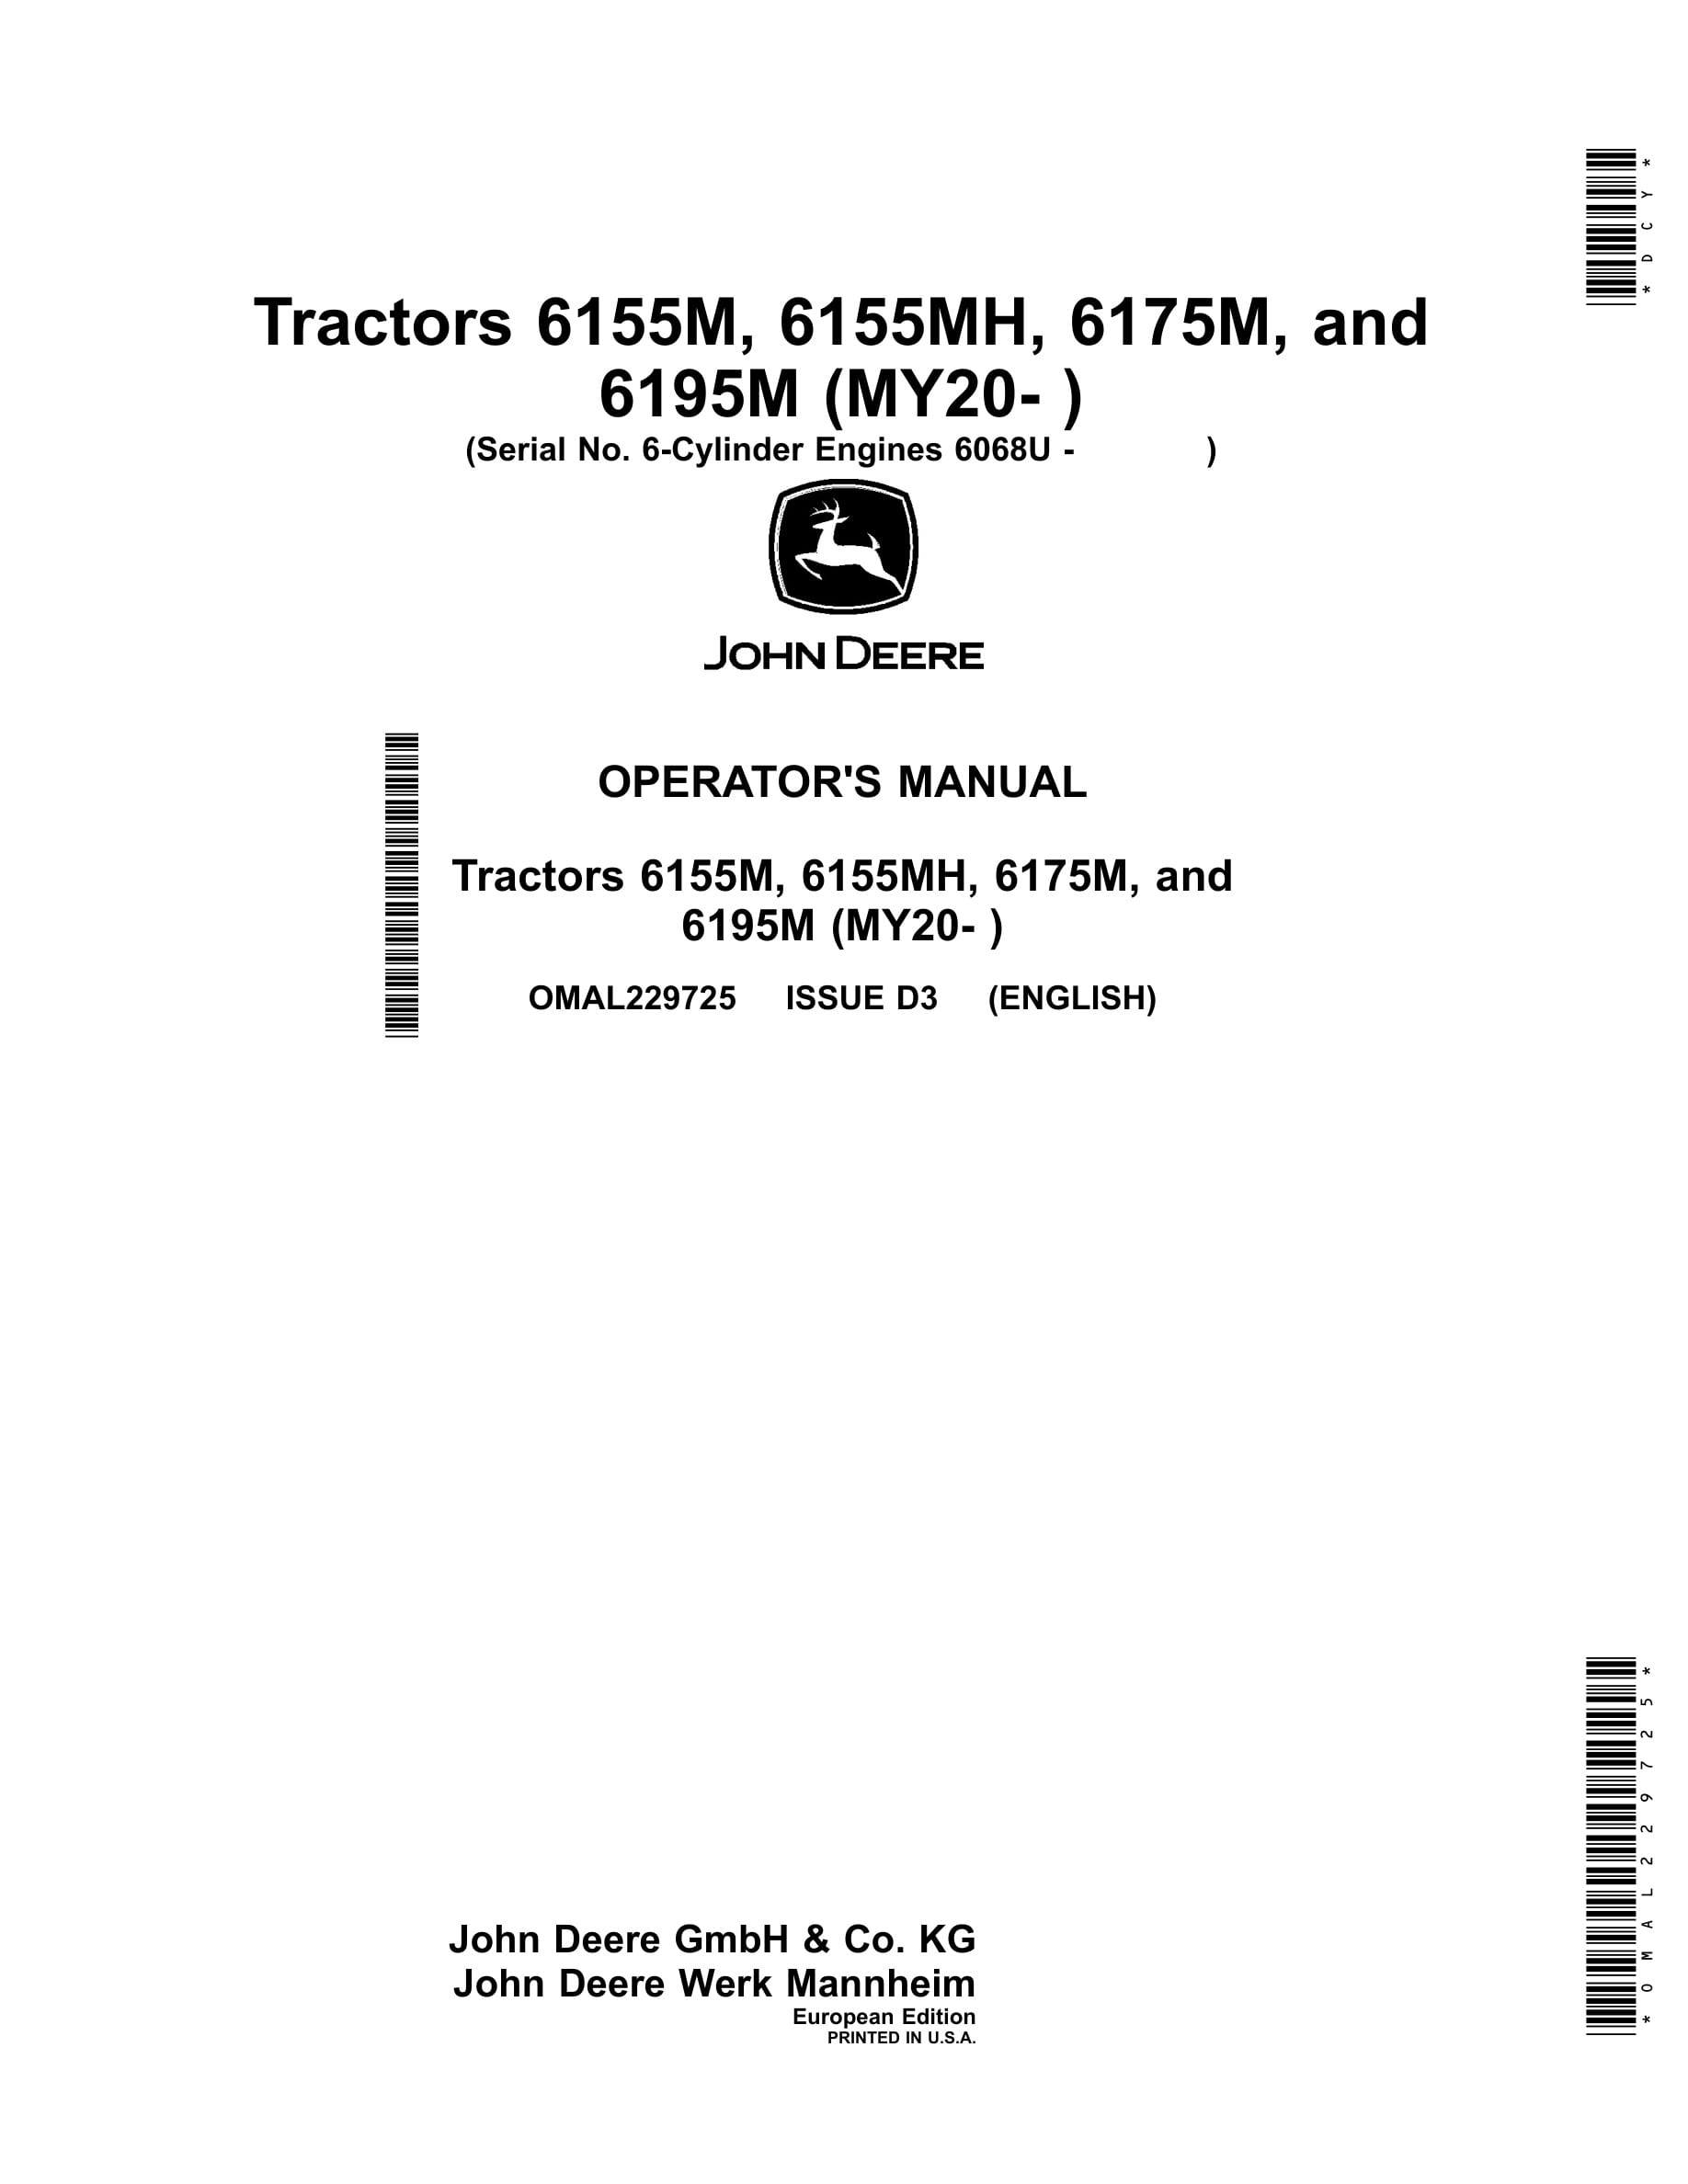 John Deere 6155m, 6155mh, 6175m, And 6195m (my20- ) Tractors Operator Manuals OMAL229725-1